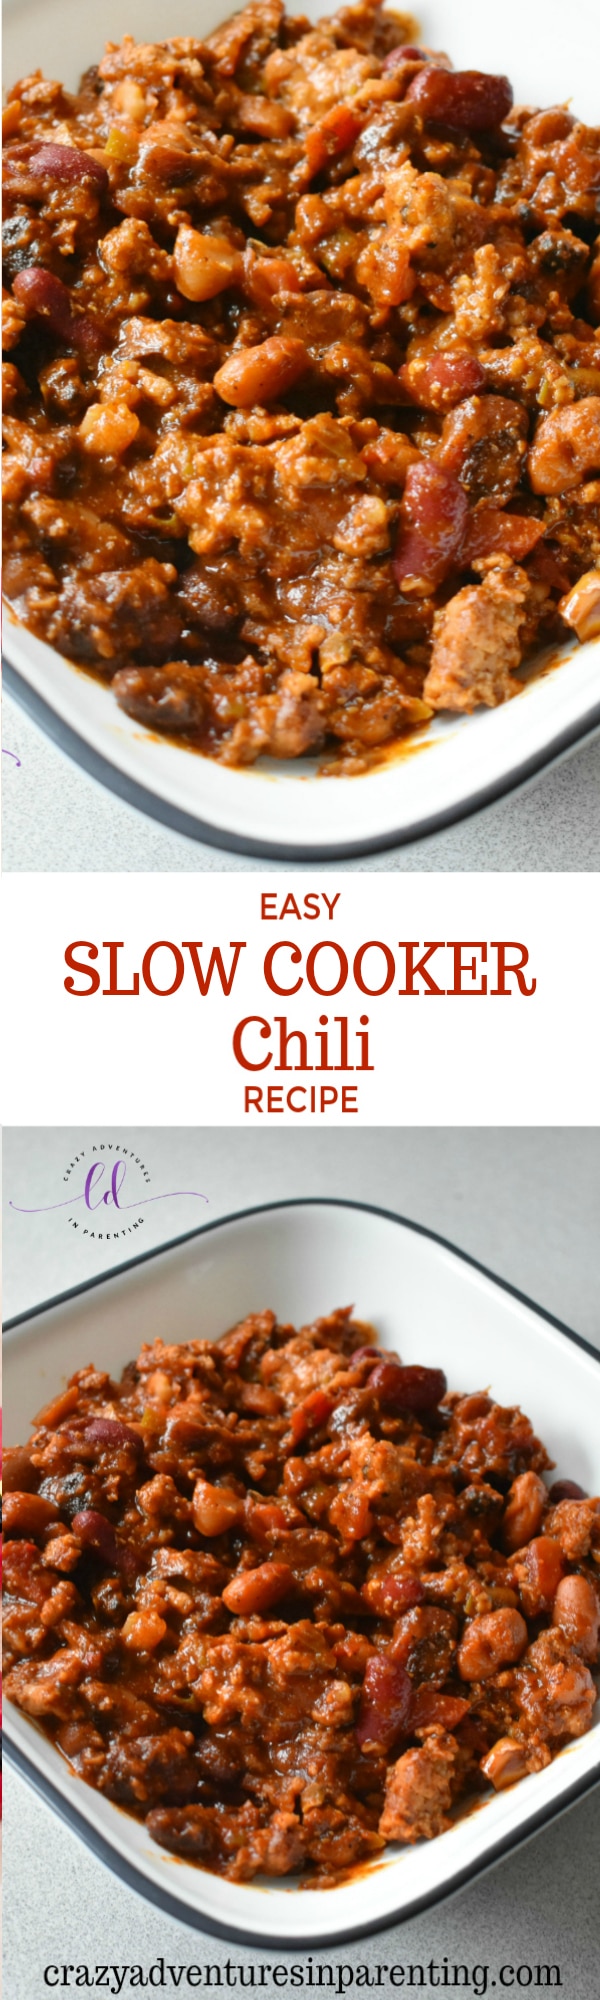 Easy Slow Cooker Chili Recipe